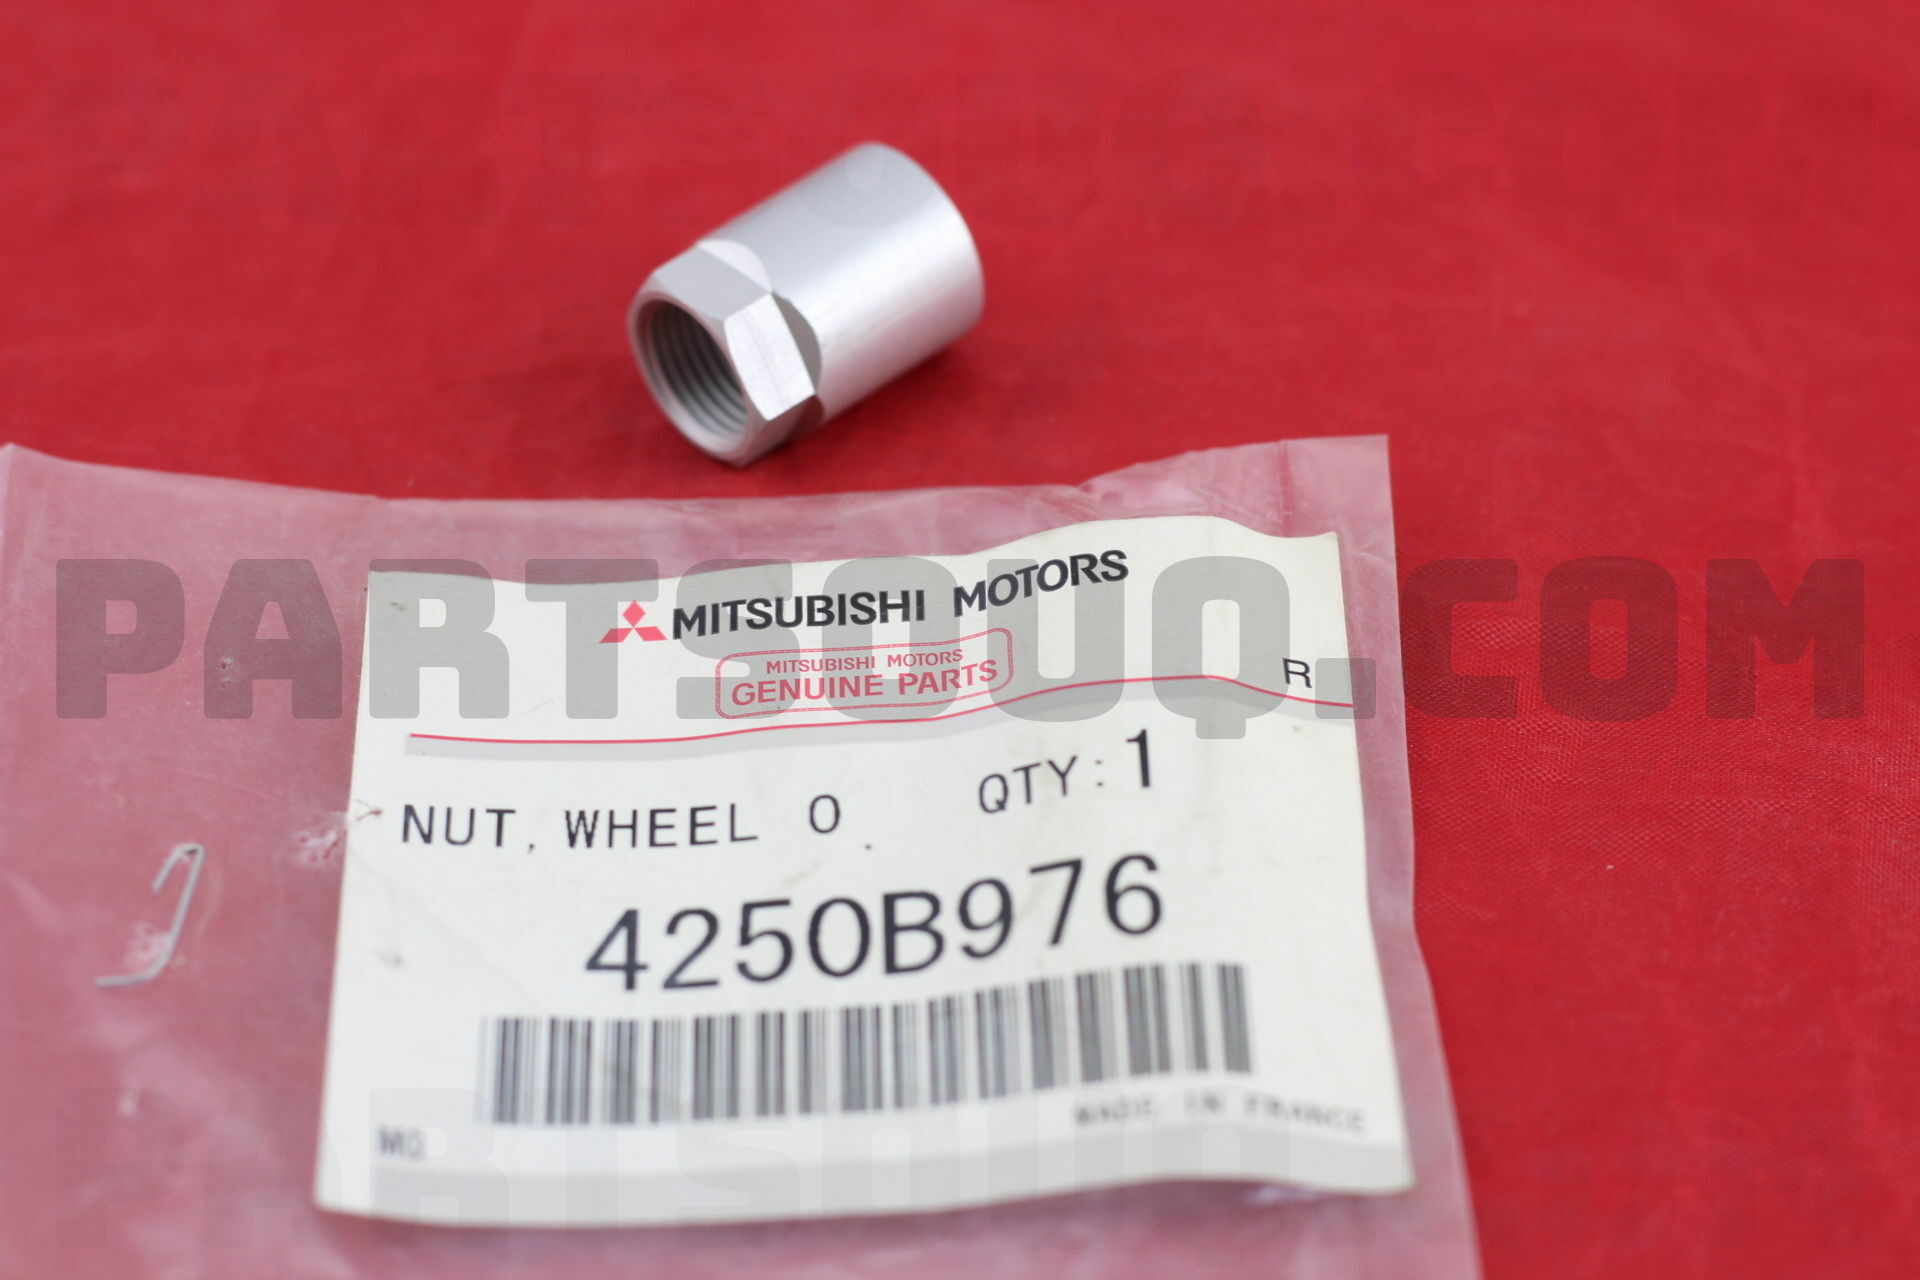 NUTWHEEL OPTION EQUIP 4250B976 | Mitsubishi Parts | PartSouq